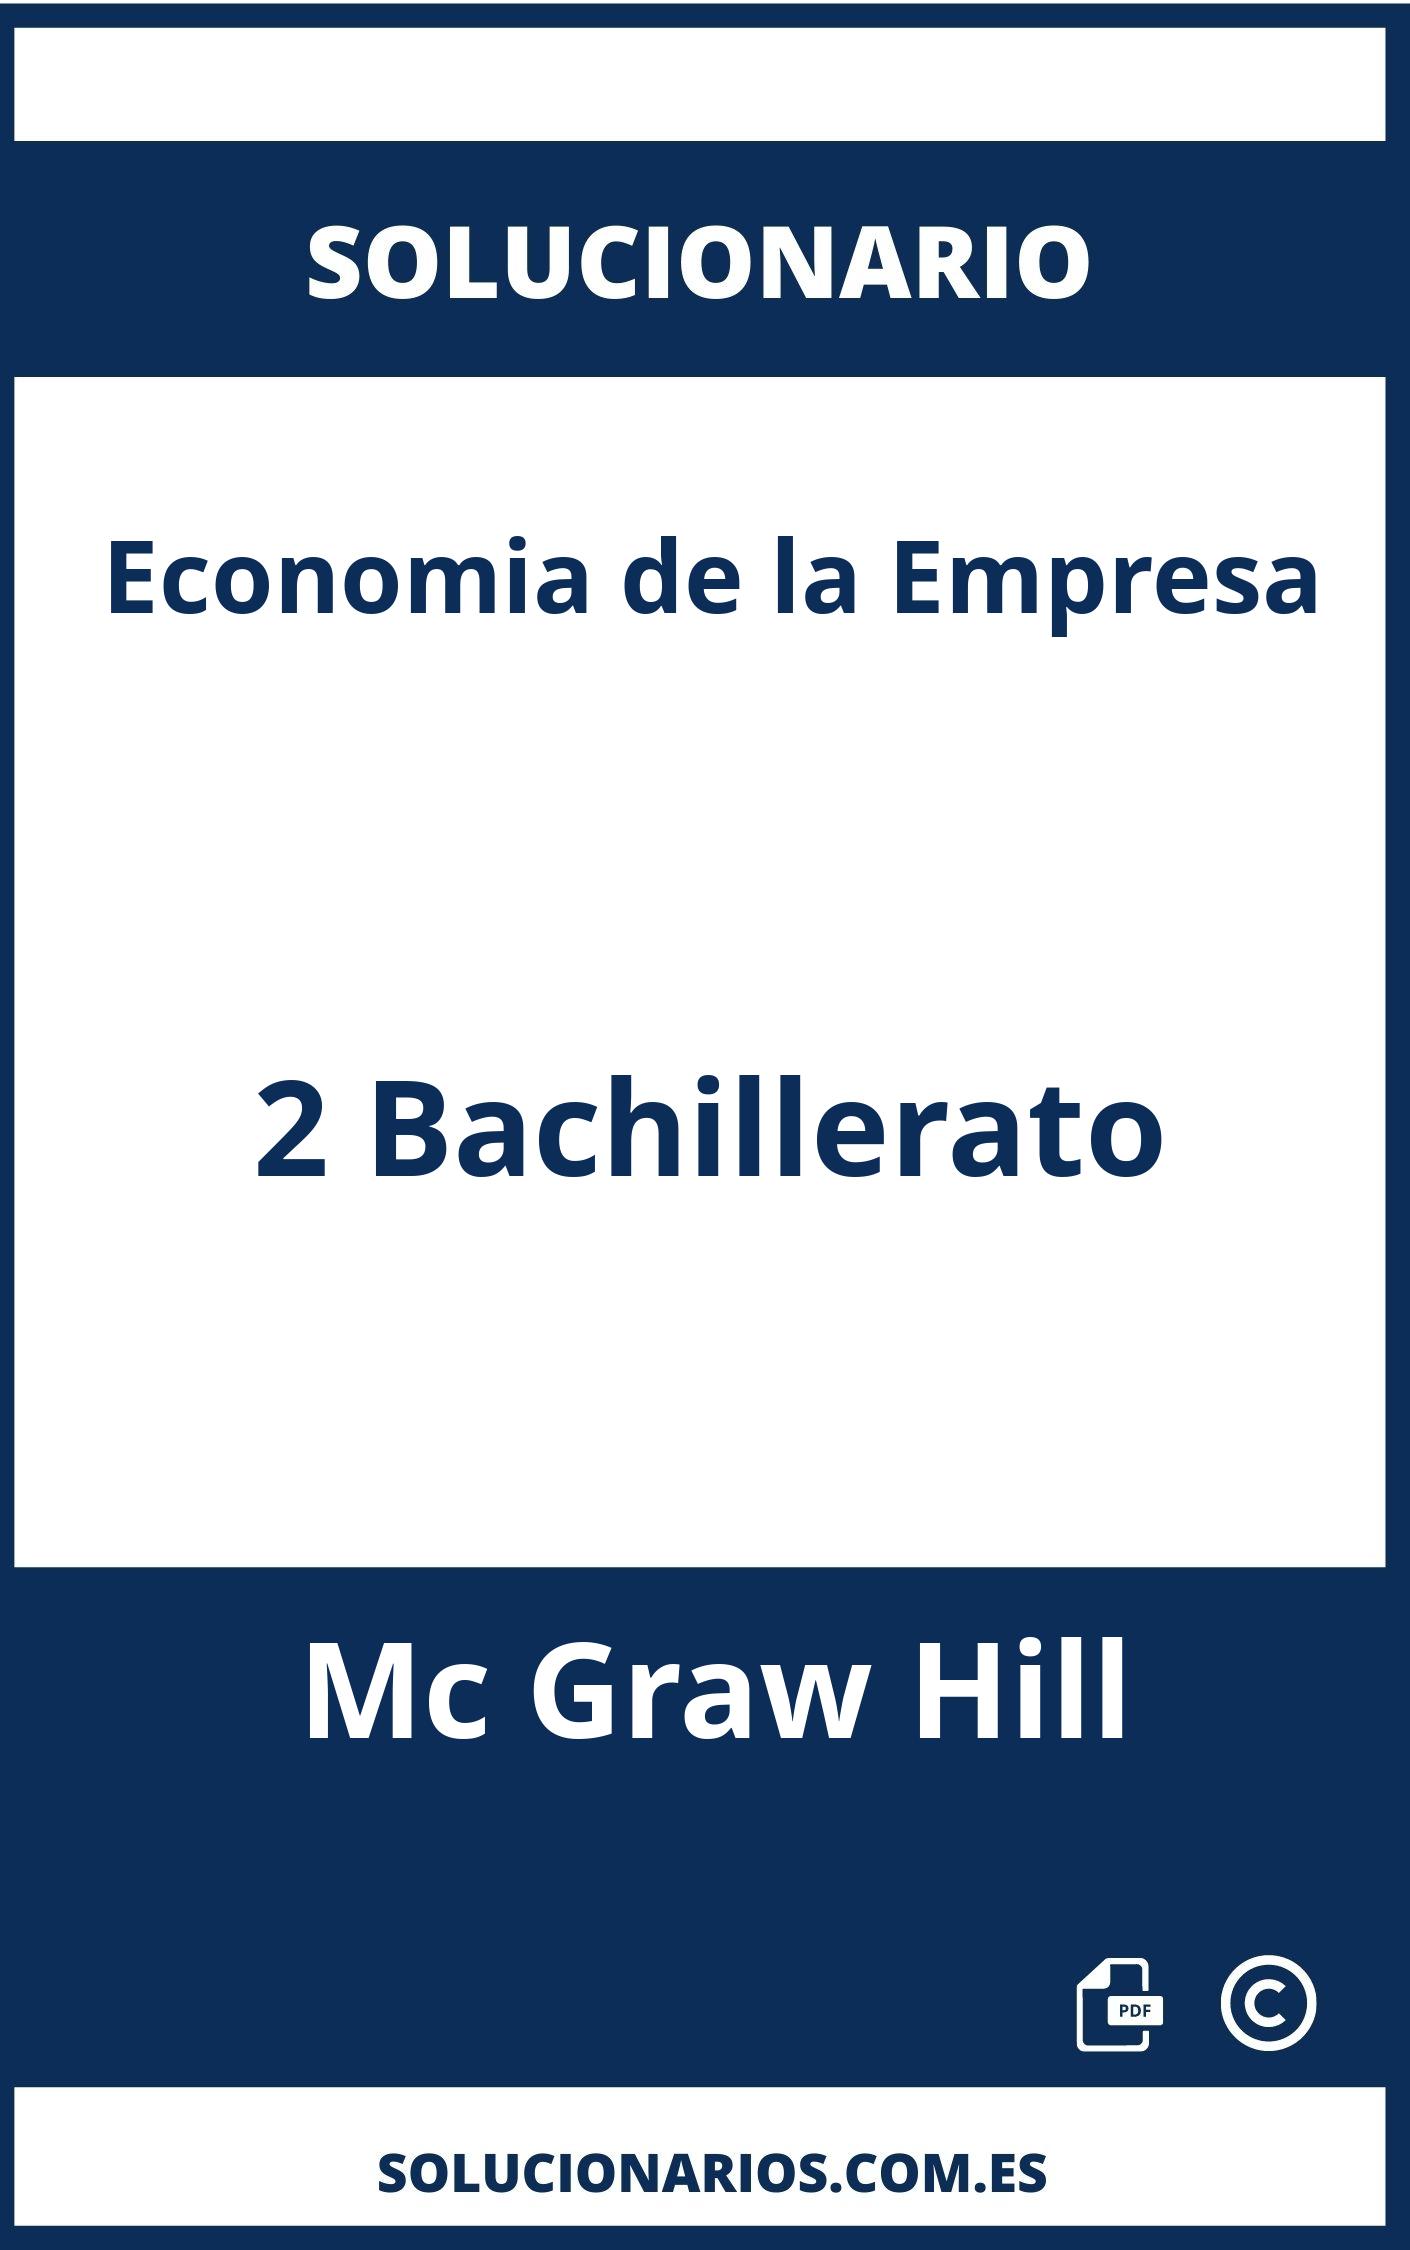 Merecer Agotar Congelar Solucionario de Economia de la Empresa 2 Bachillerato Mc Graw Hill